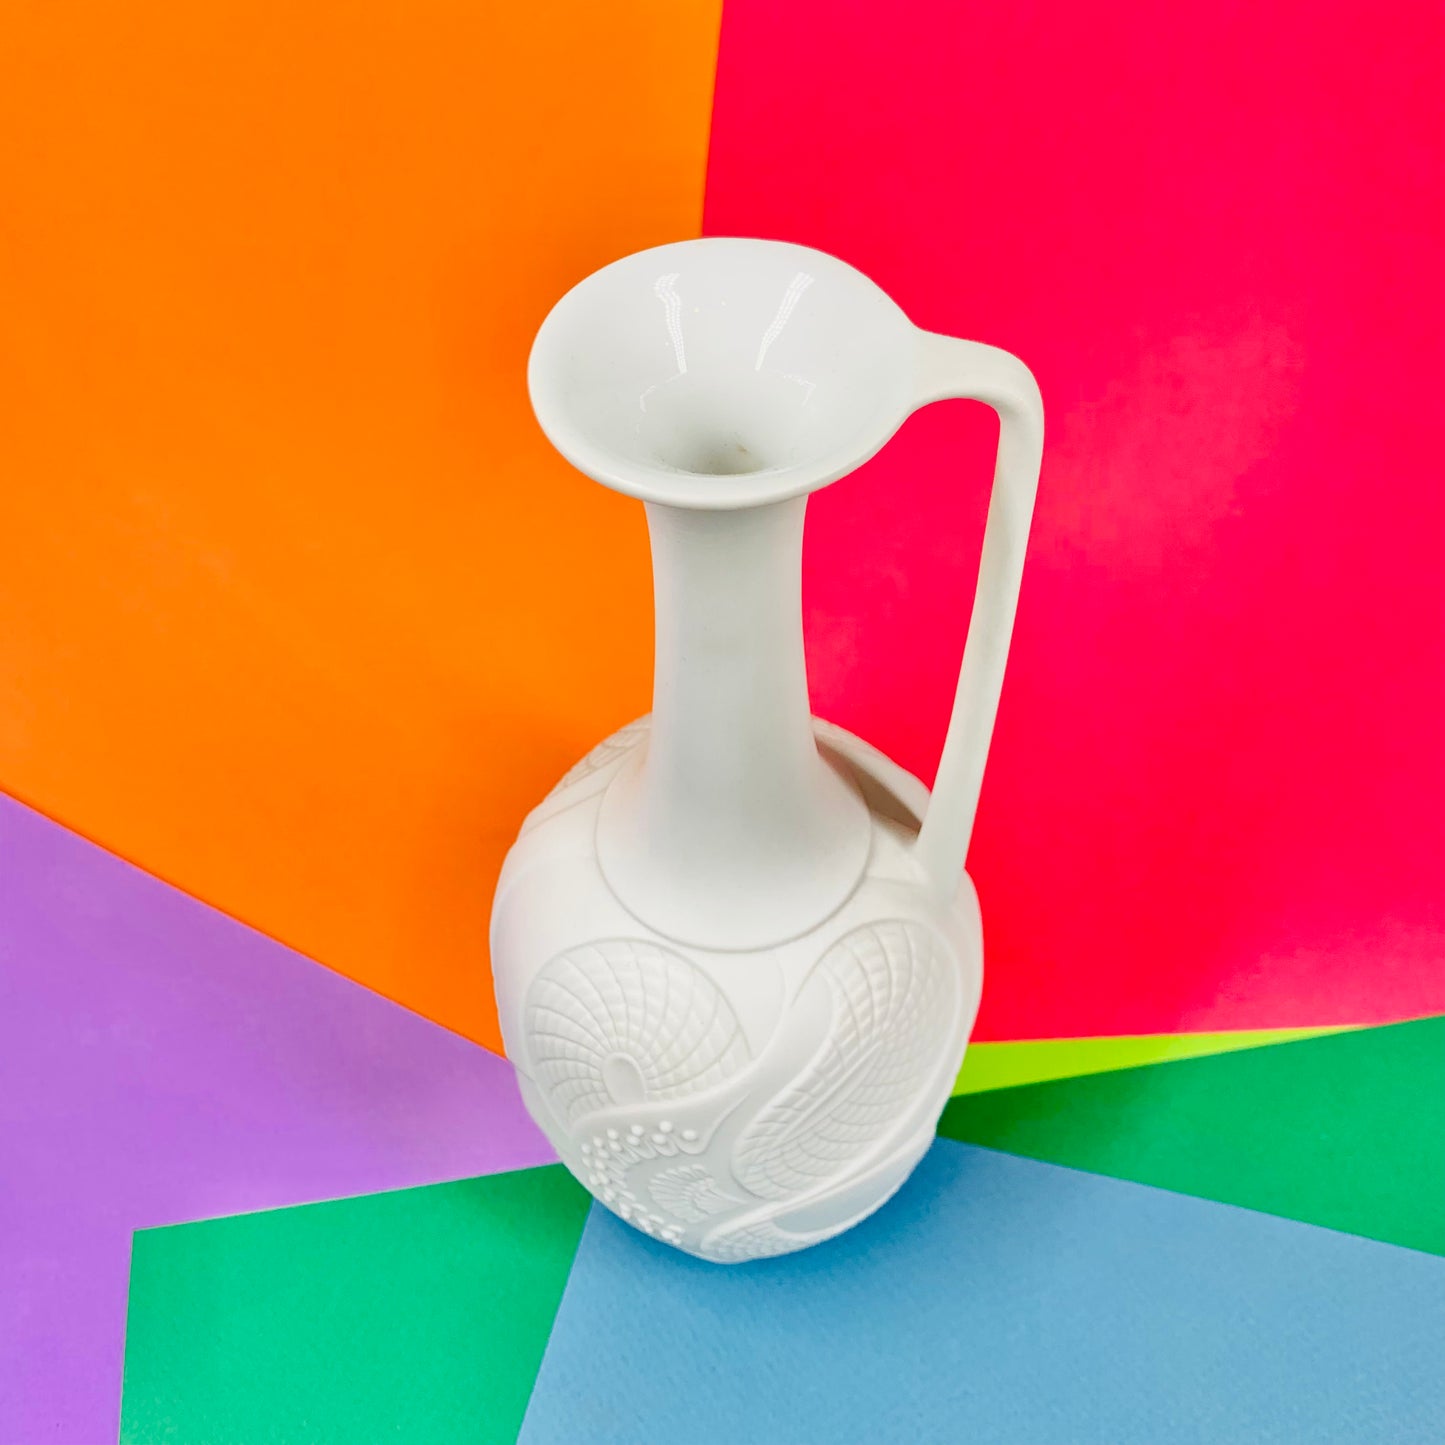 Rare Midcentury West German Kaiser white bisque porcelain jug vase